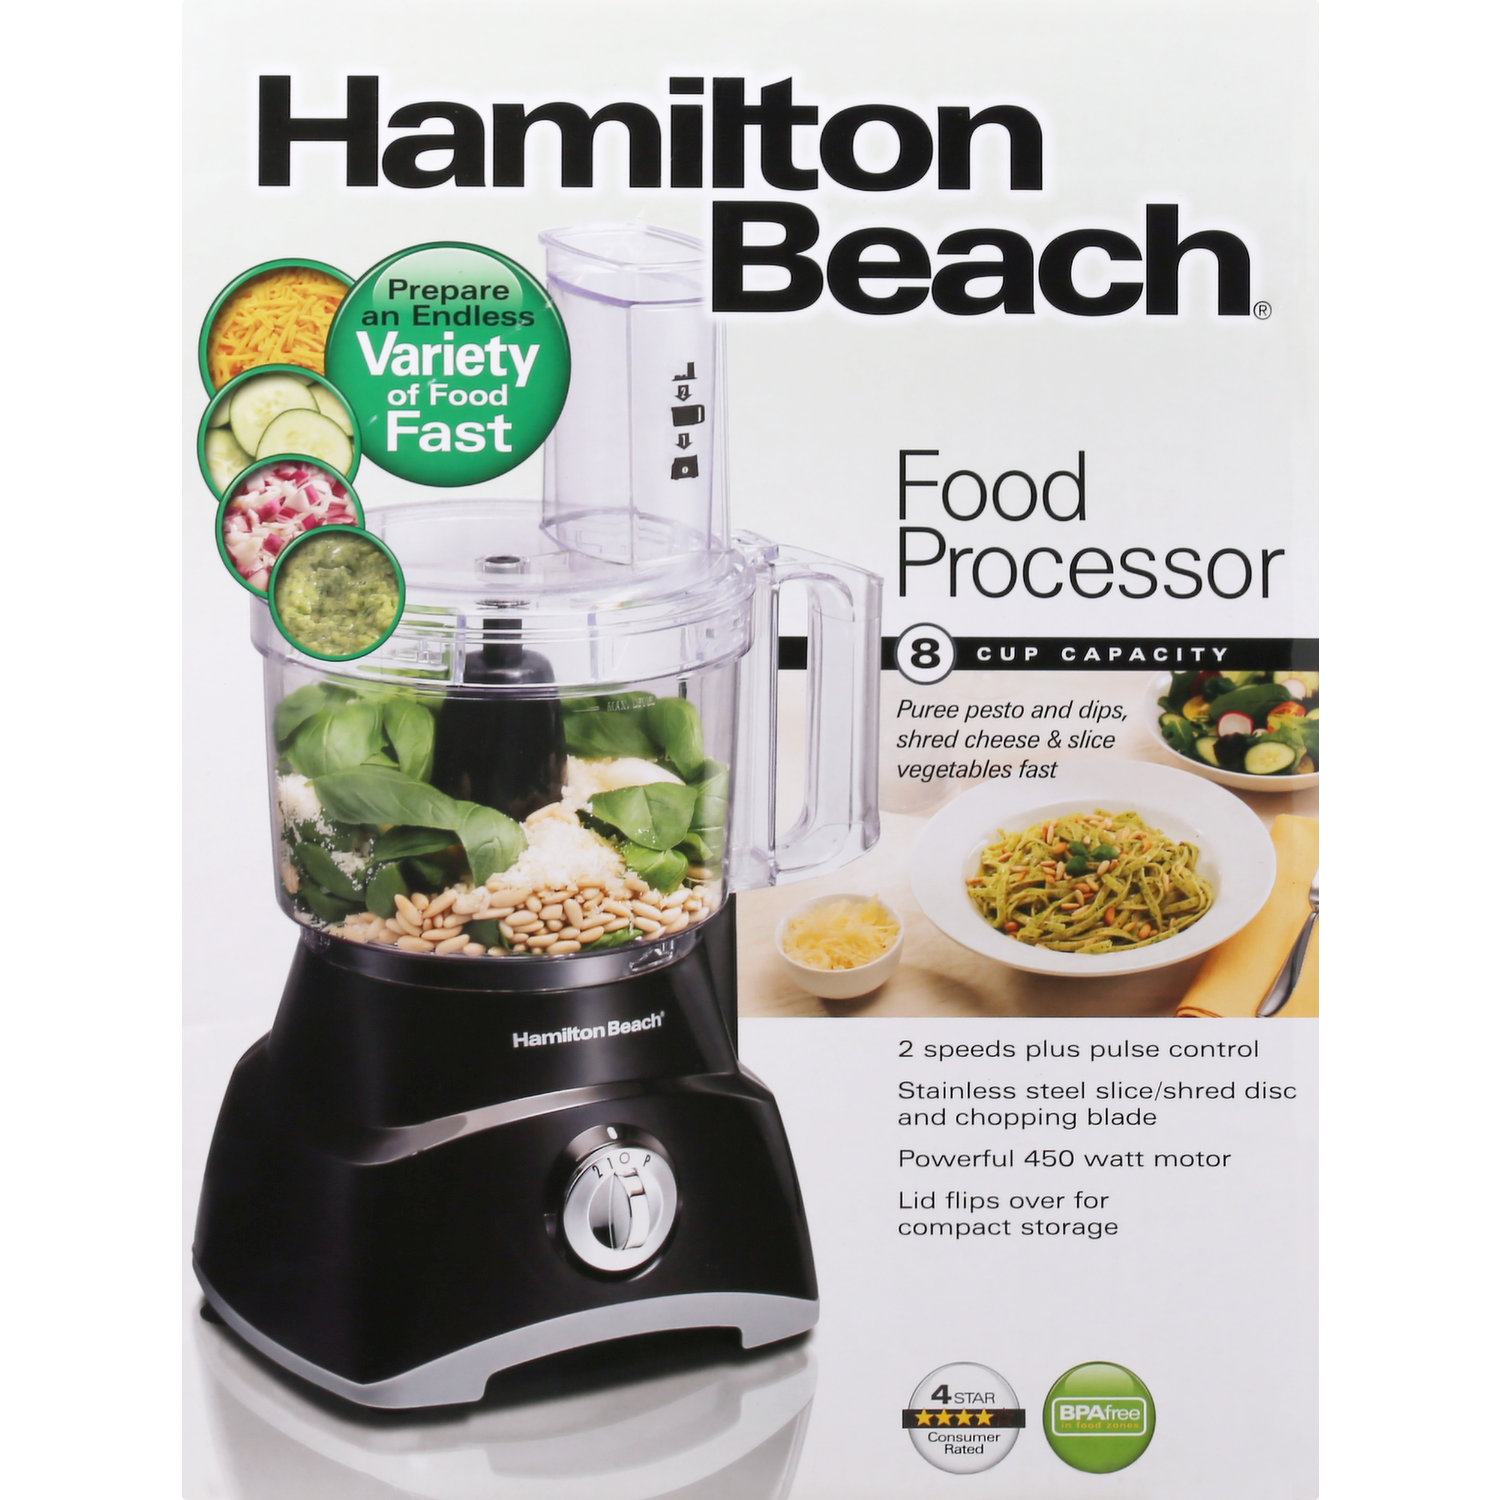 Hamilton Beach 8-Cup 2-Speed Black Food Processor and Vegetable Chopper 70740